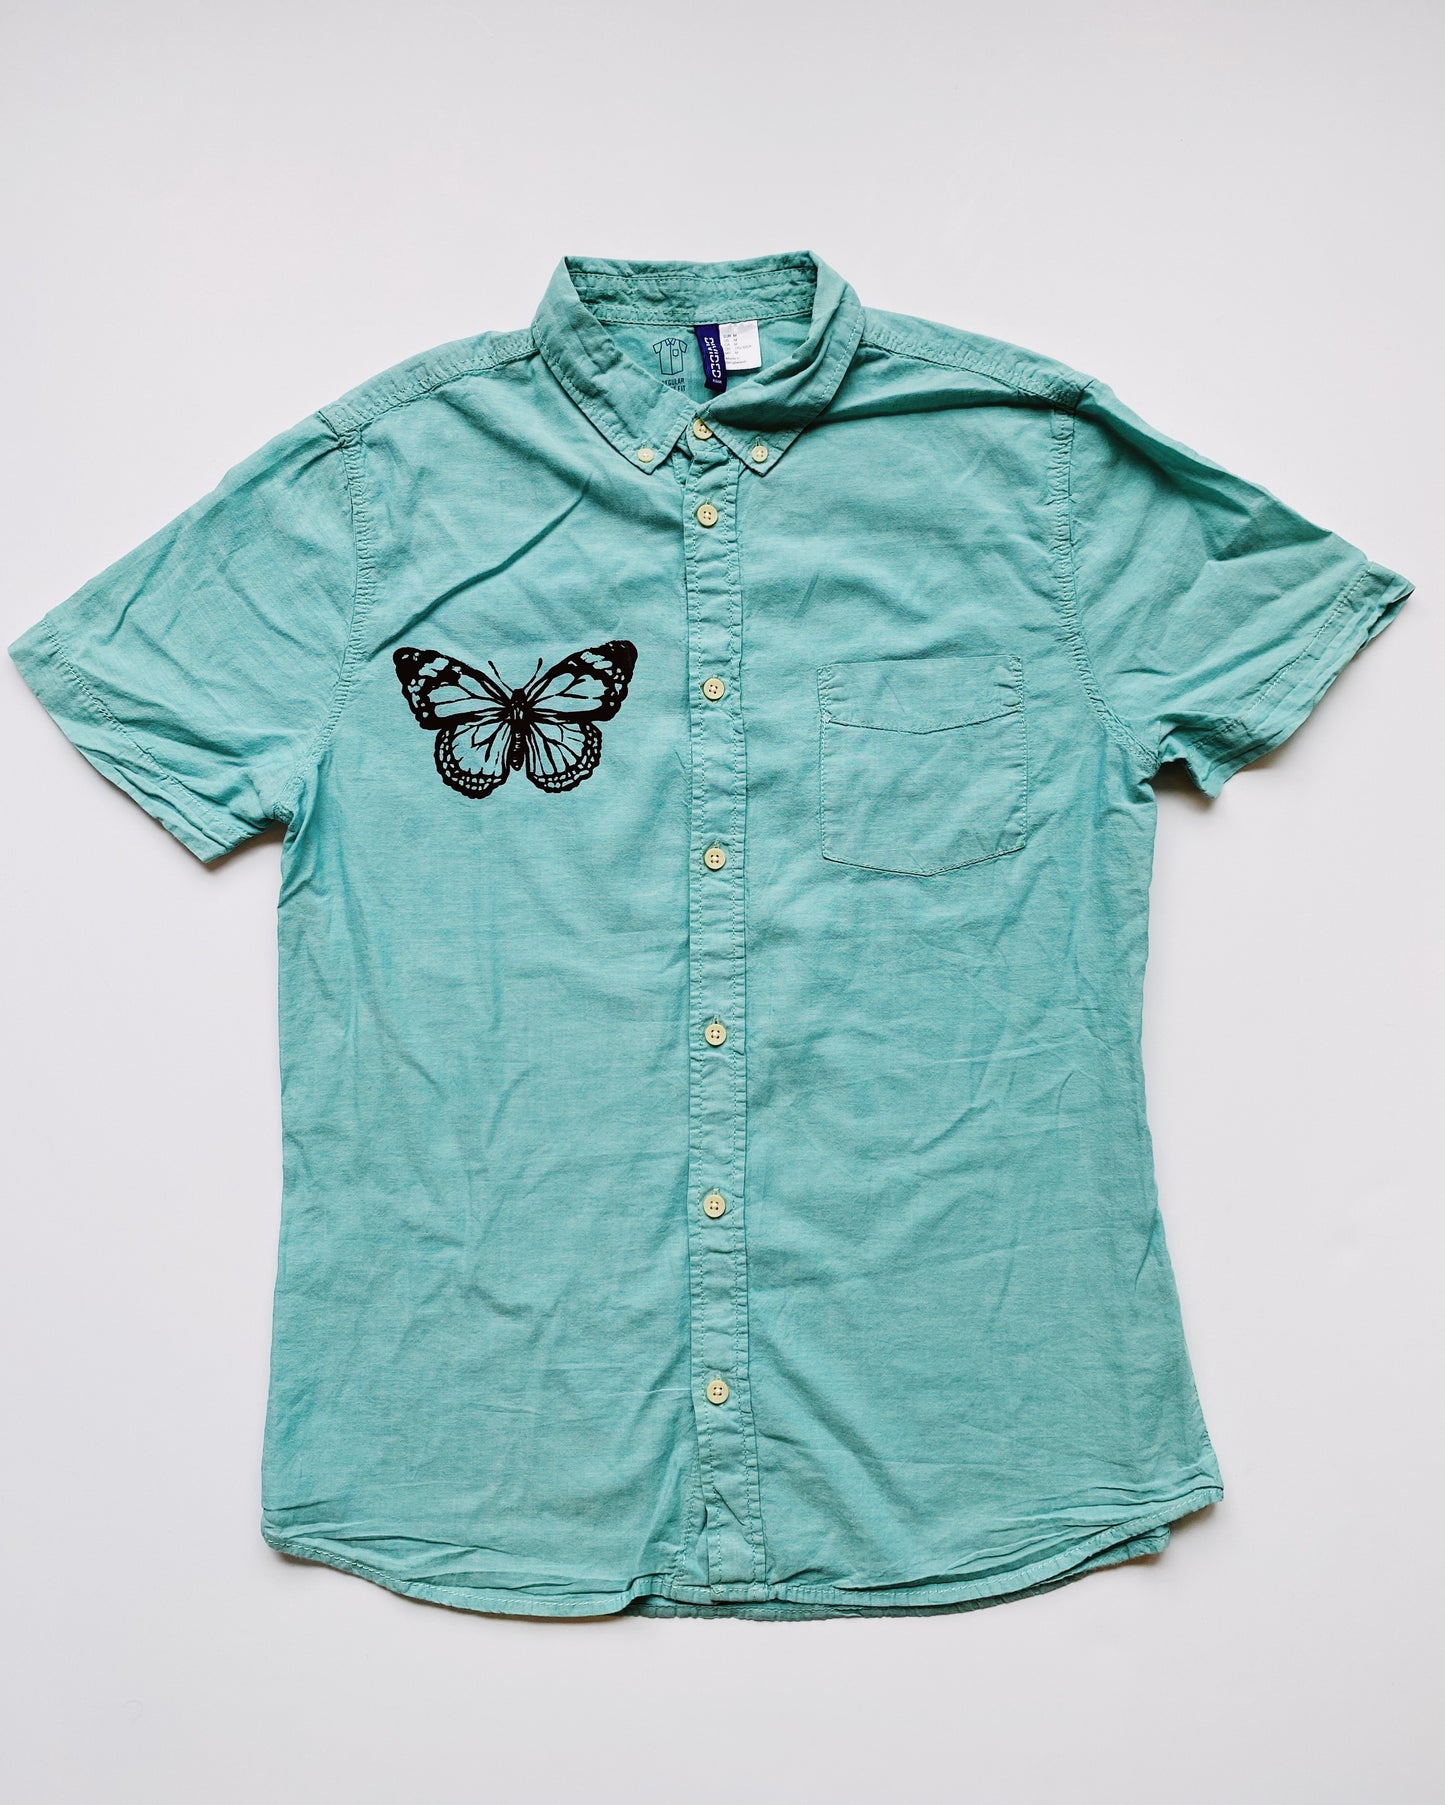 teal butterfly button down shirt